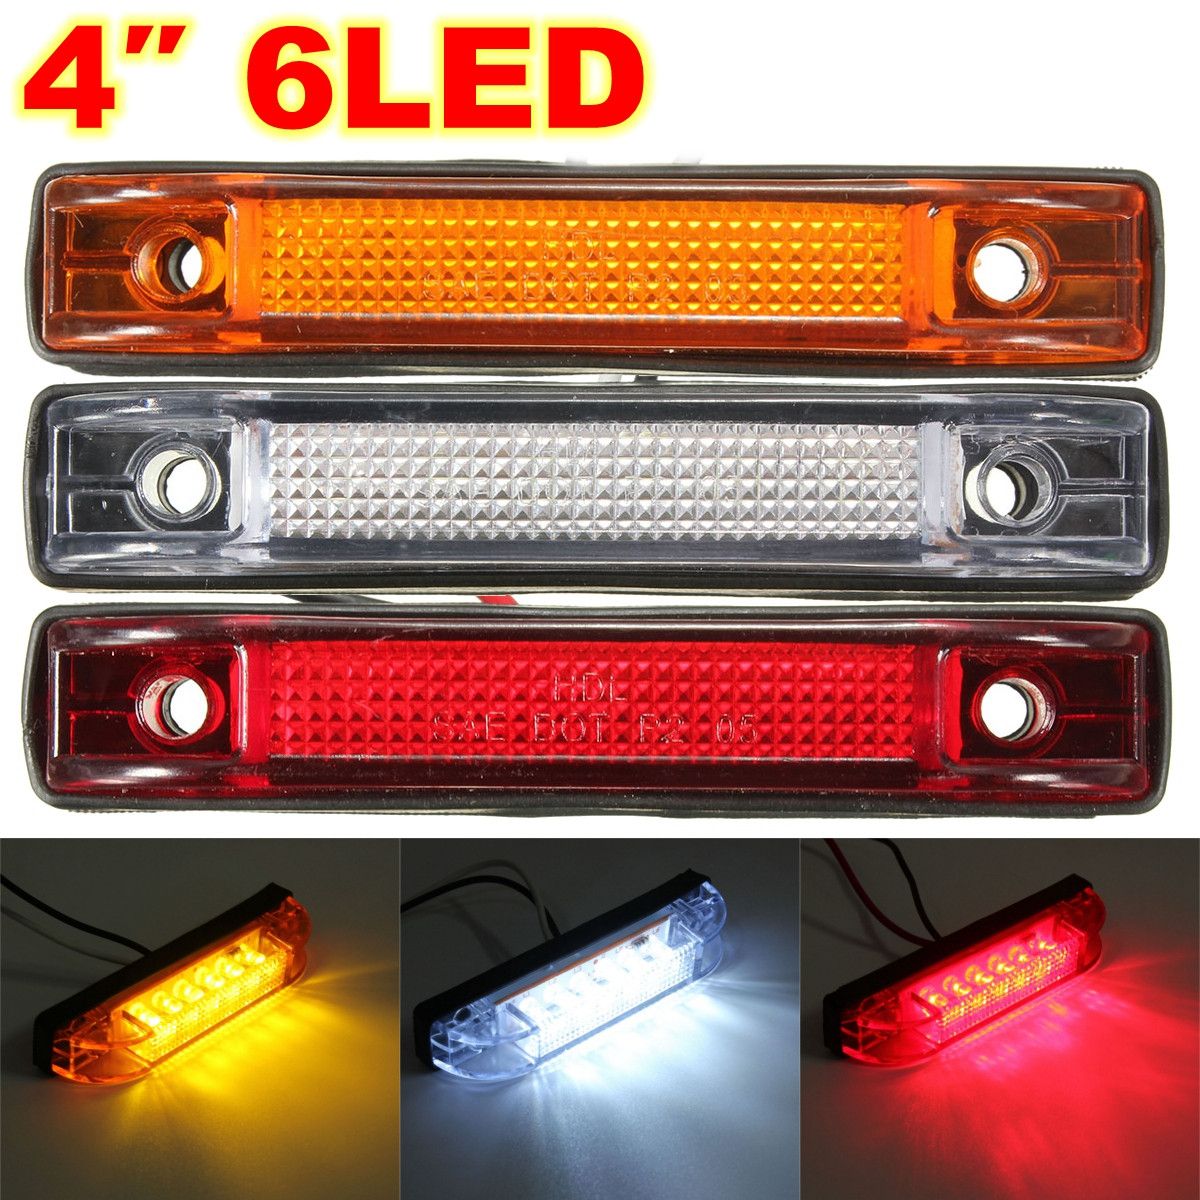 6-LED-Clearance-Side-Marker-Light-Indicator-Lamp-Truck-Trailer-Lorry-Van-12V-24V-1041426